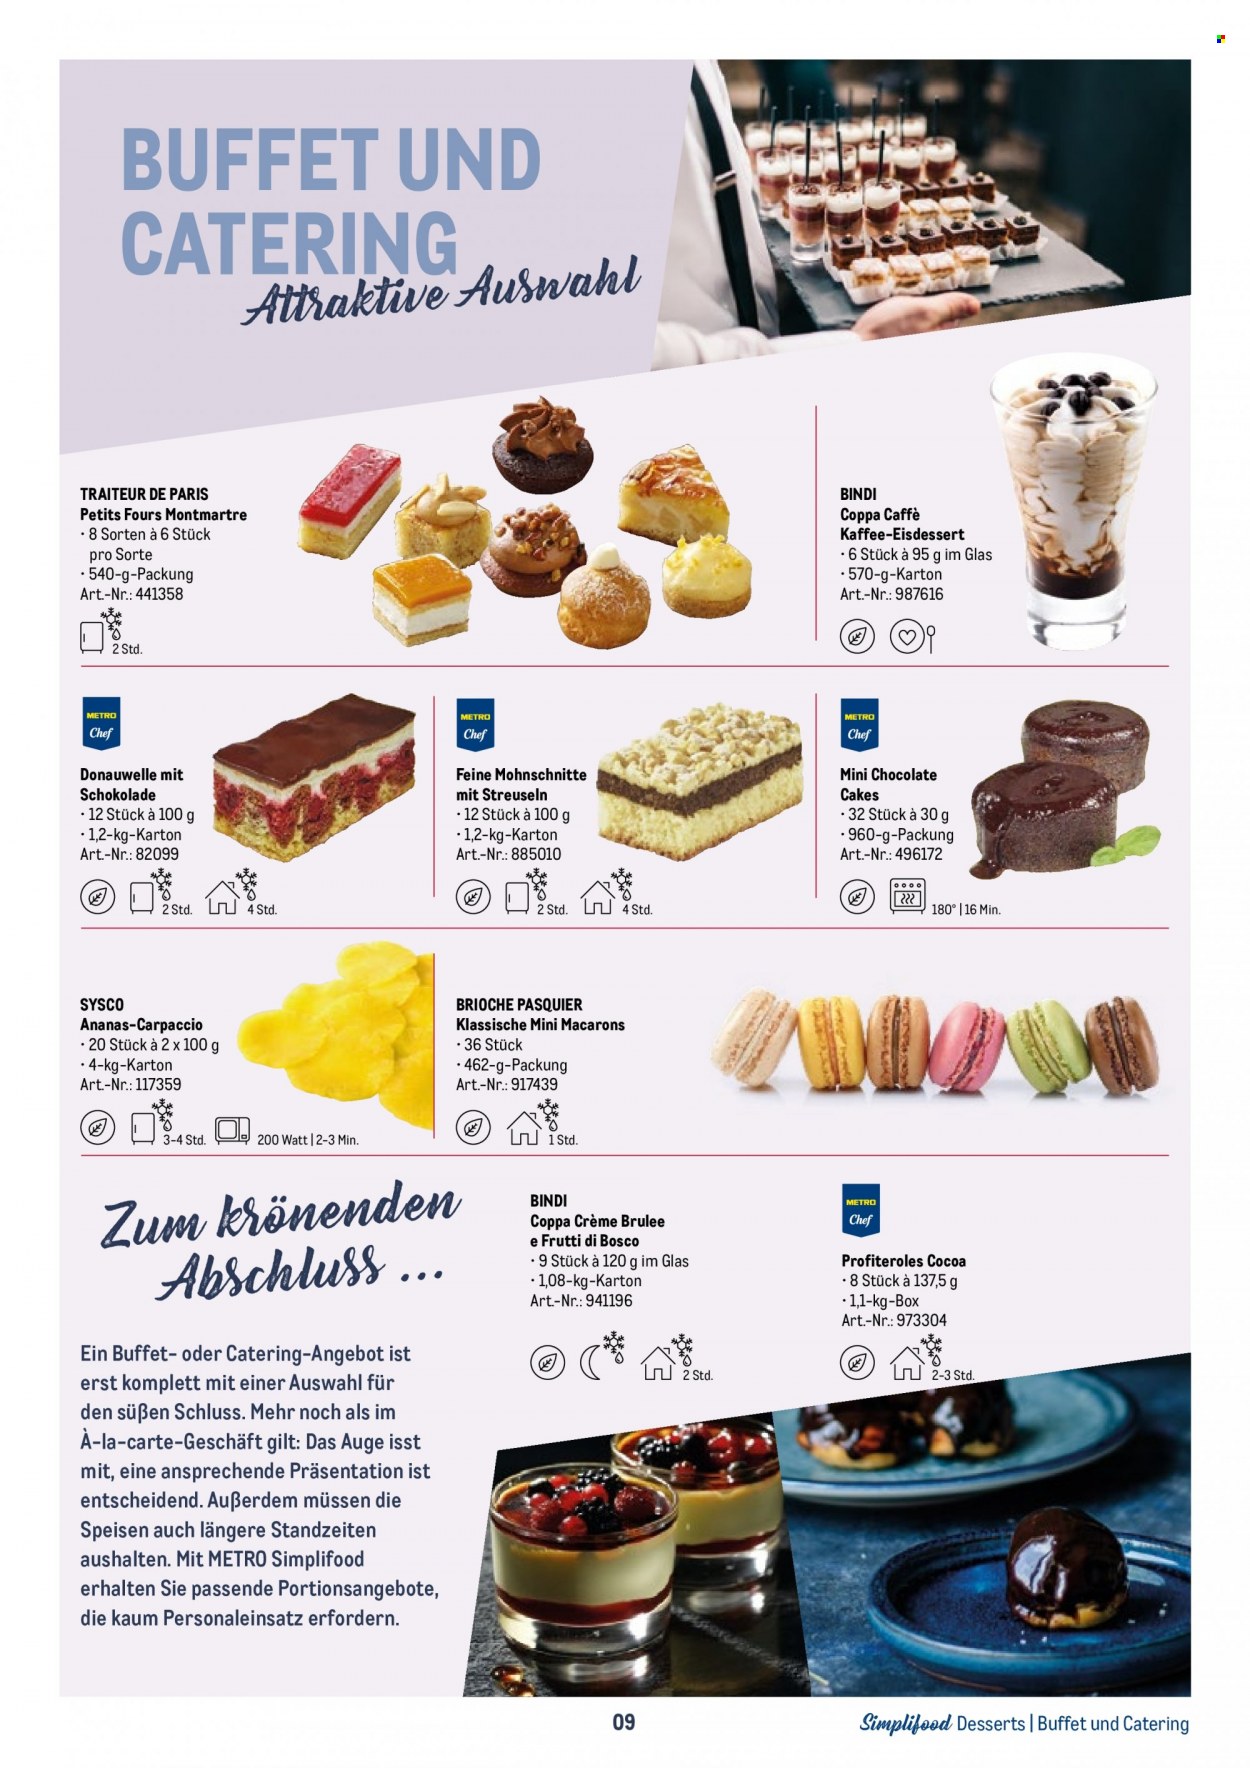 thumbnail - Prospekte Metro - Produkte in Aktion - Carpaccio, Macarons, Italienisches Dessert, Ananas, Crème Brûlée, Profiteroles, Eis Dessert, Kaffee. Seite 9.